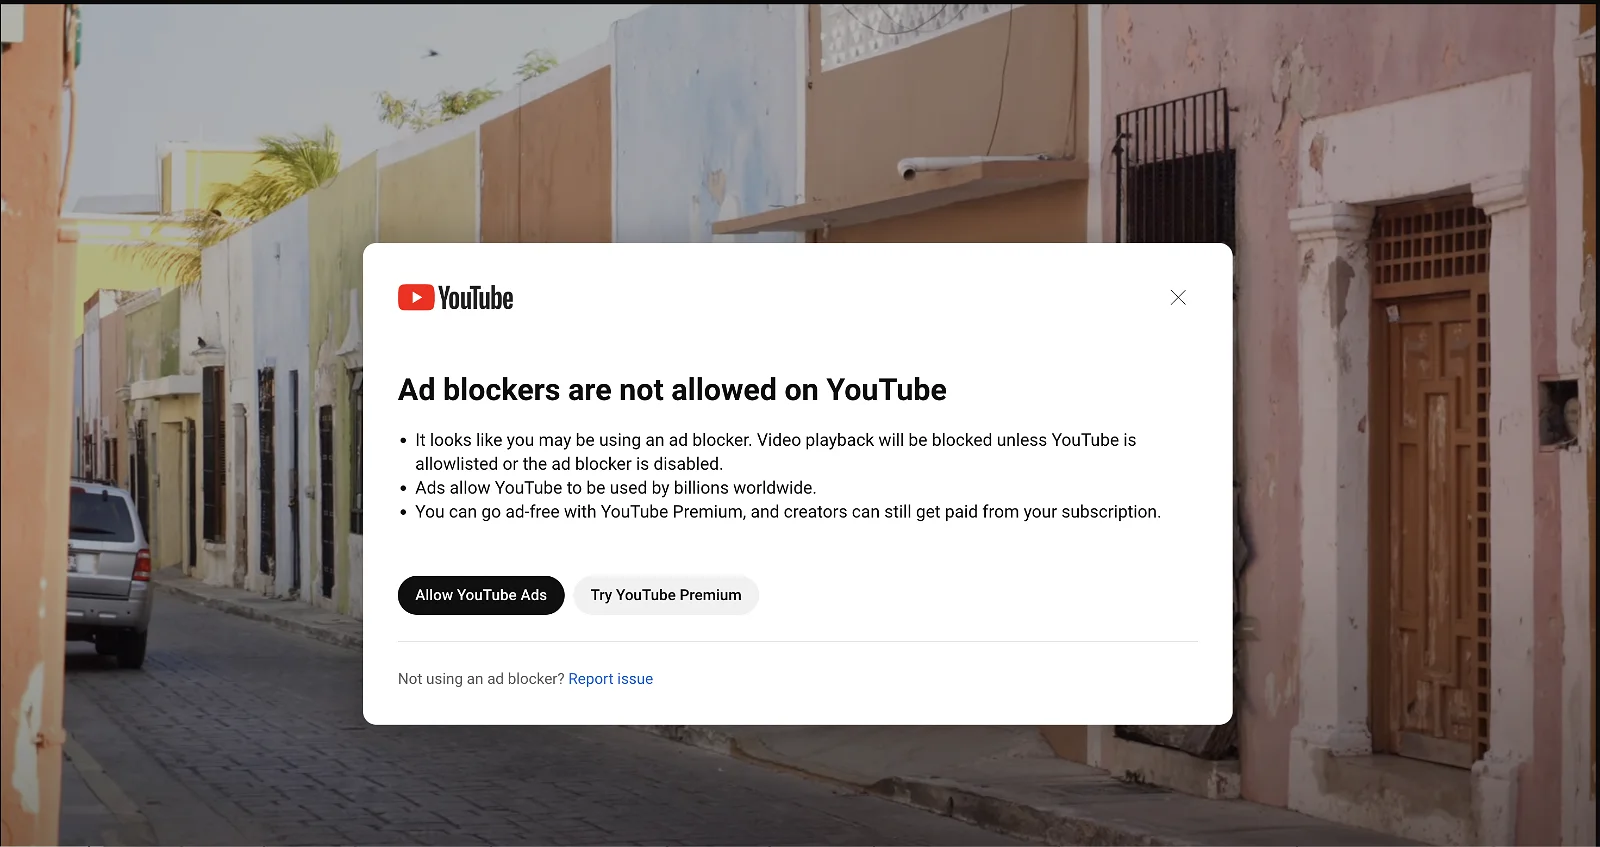 Estrategia de YouTube contra bloqueadores no resultó como esperaban